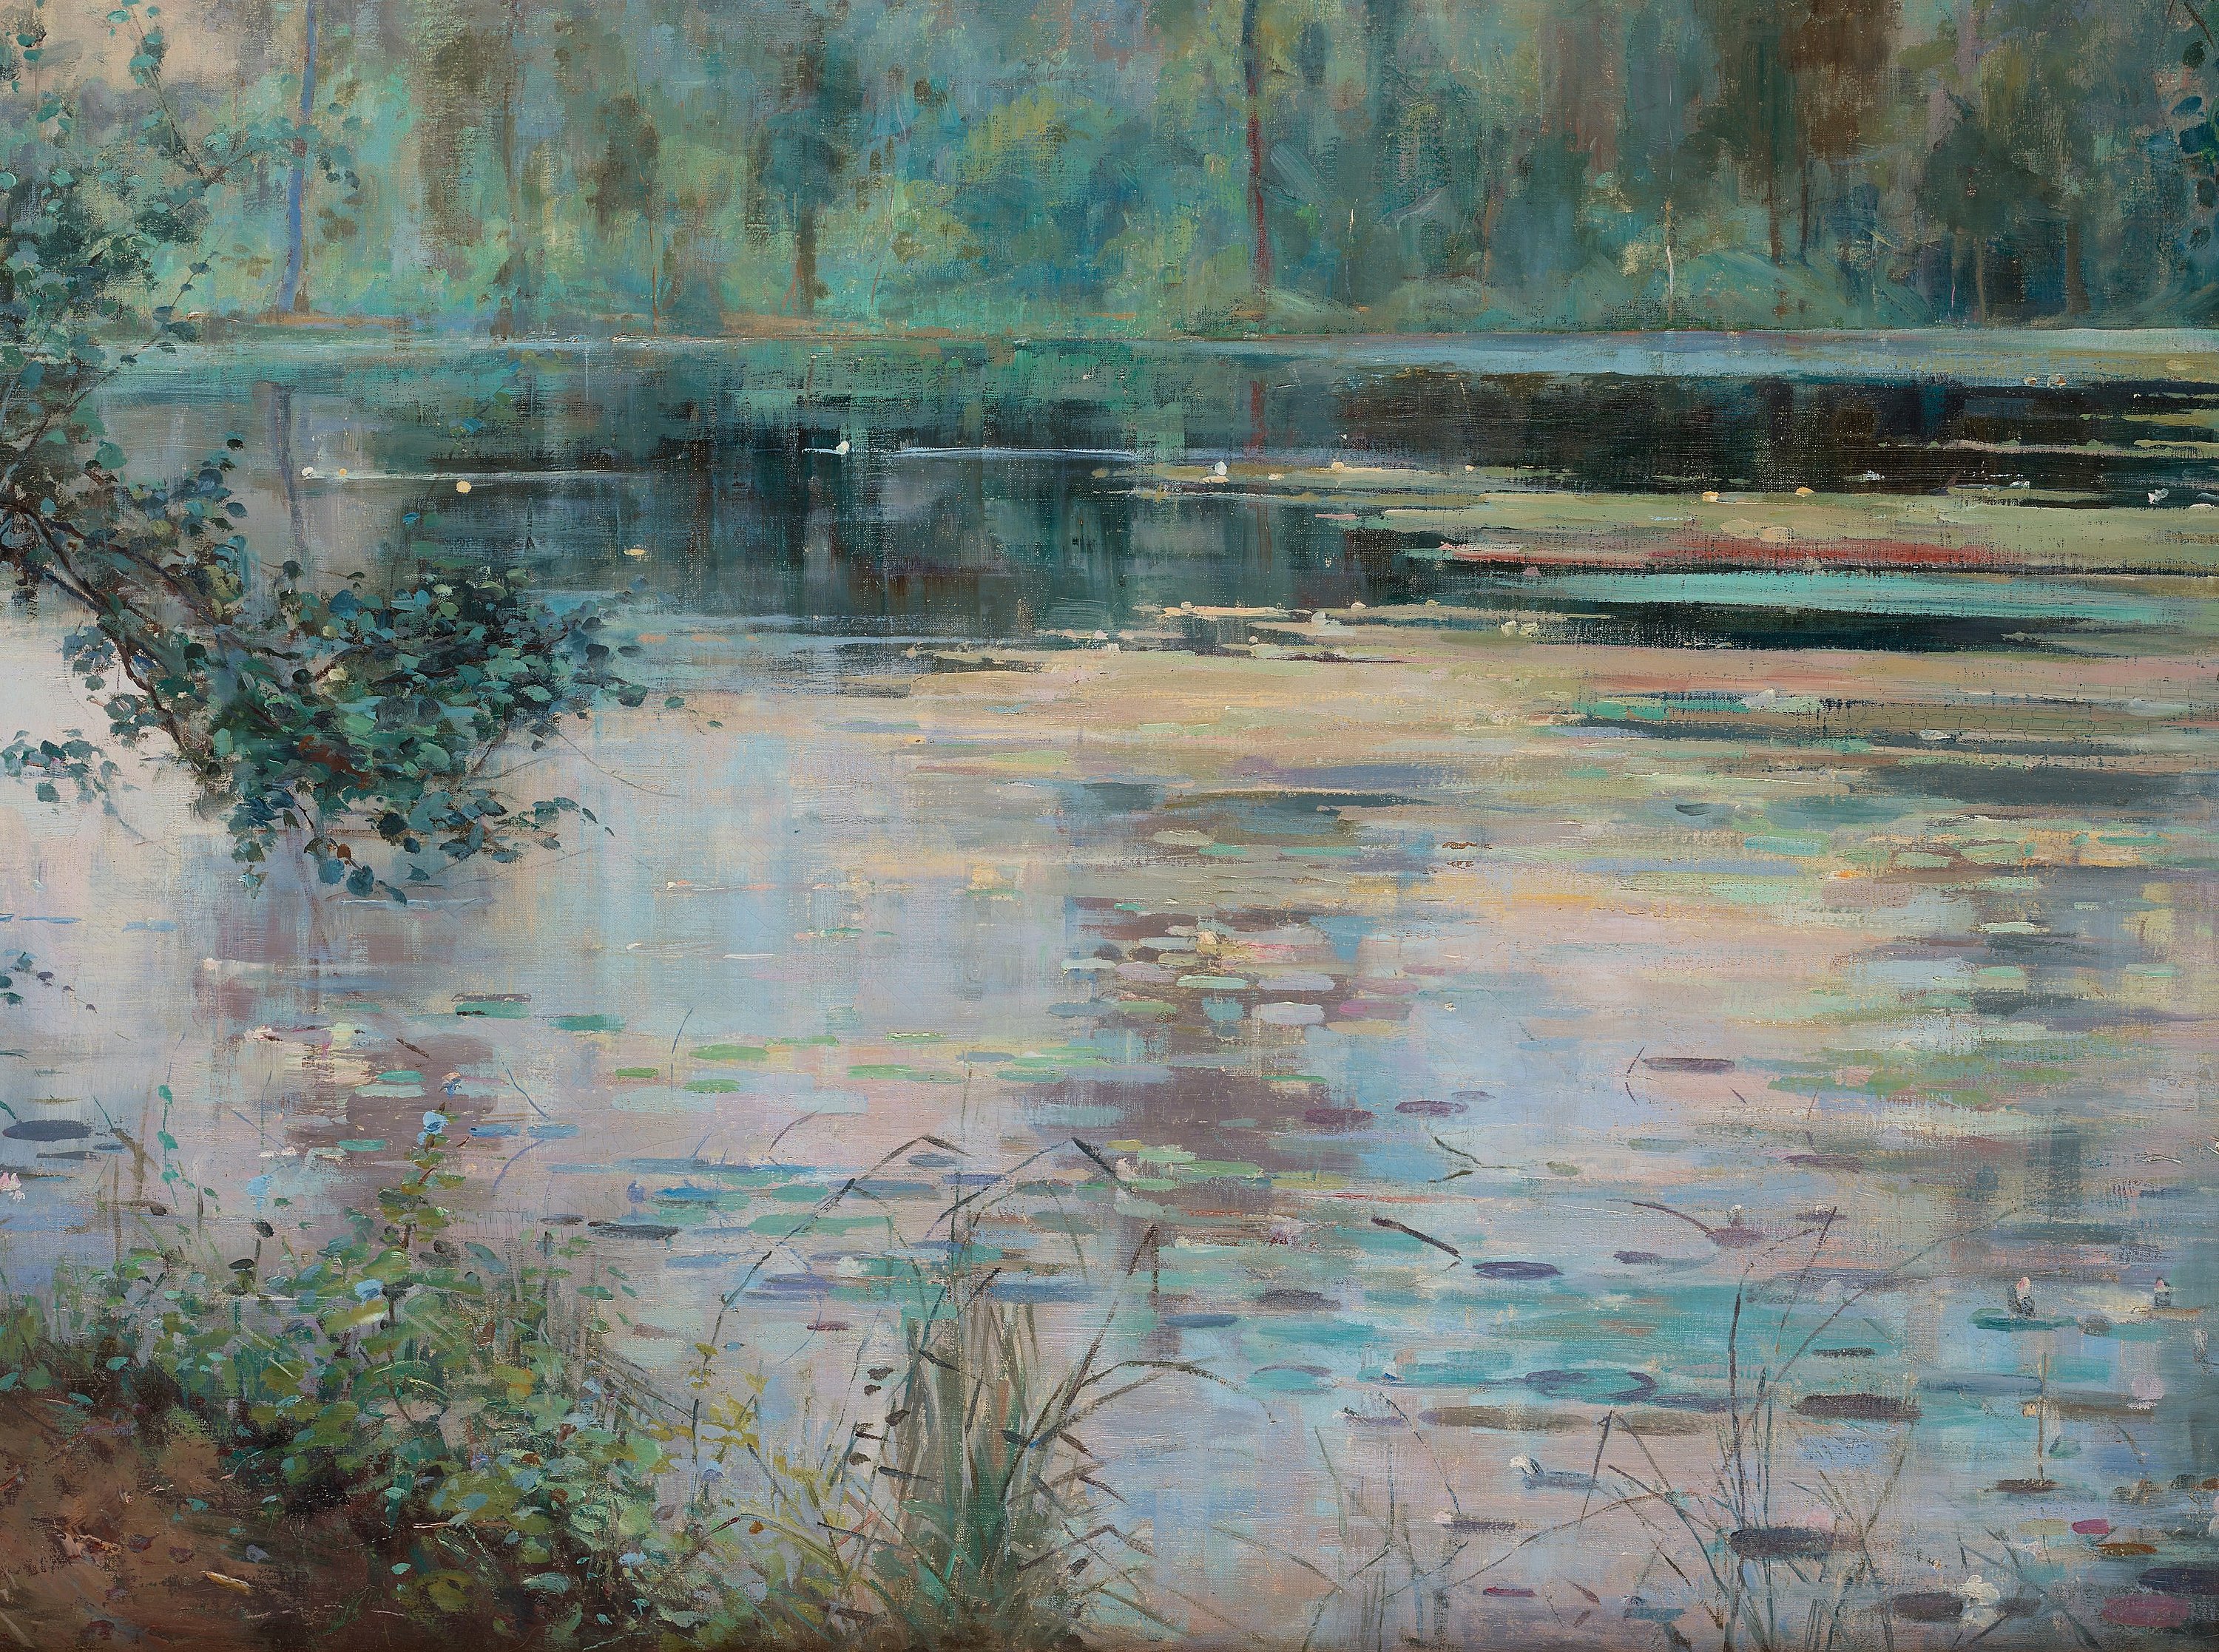 Gölet (Sis) (orig. "The Pond (Mist)") by Julia Beck - 1900 civarı - 76 x 107 cm özel koleksiyon